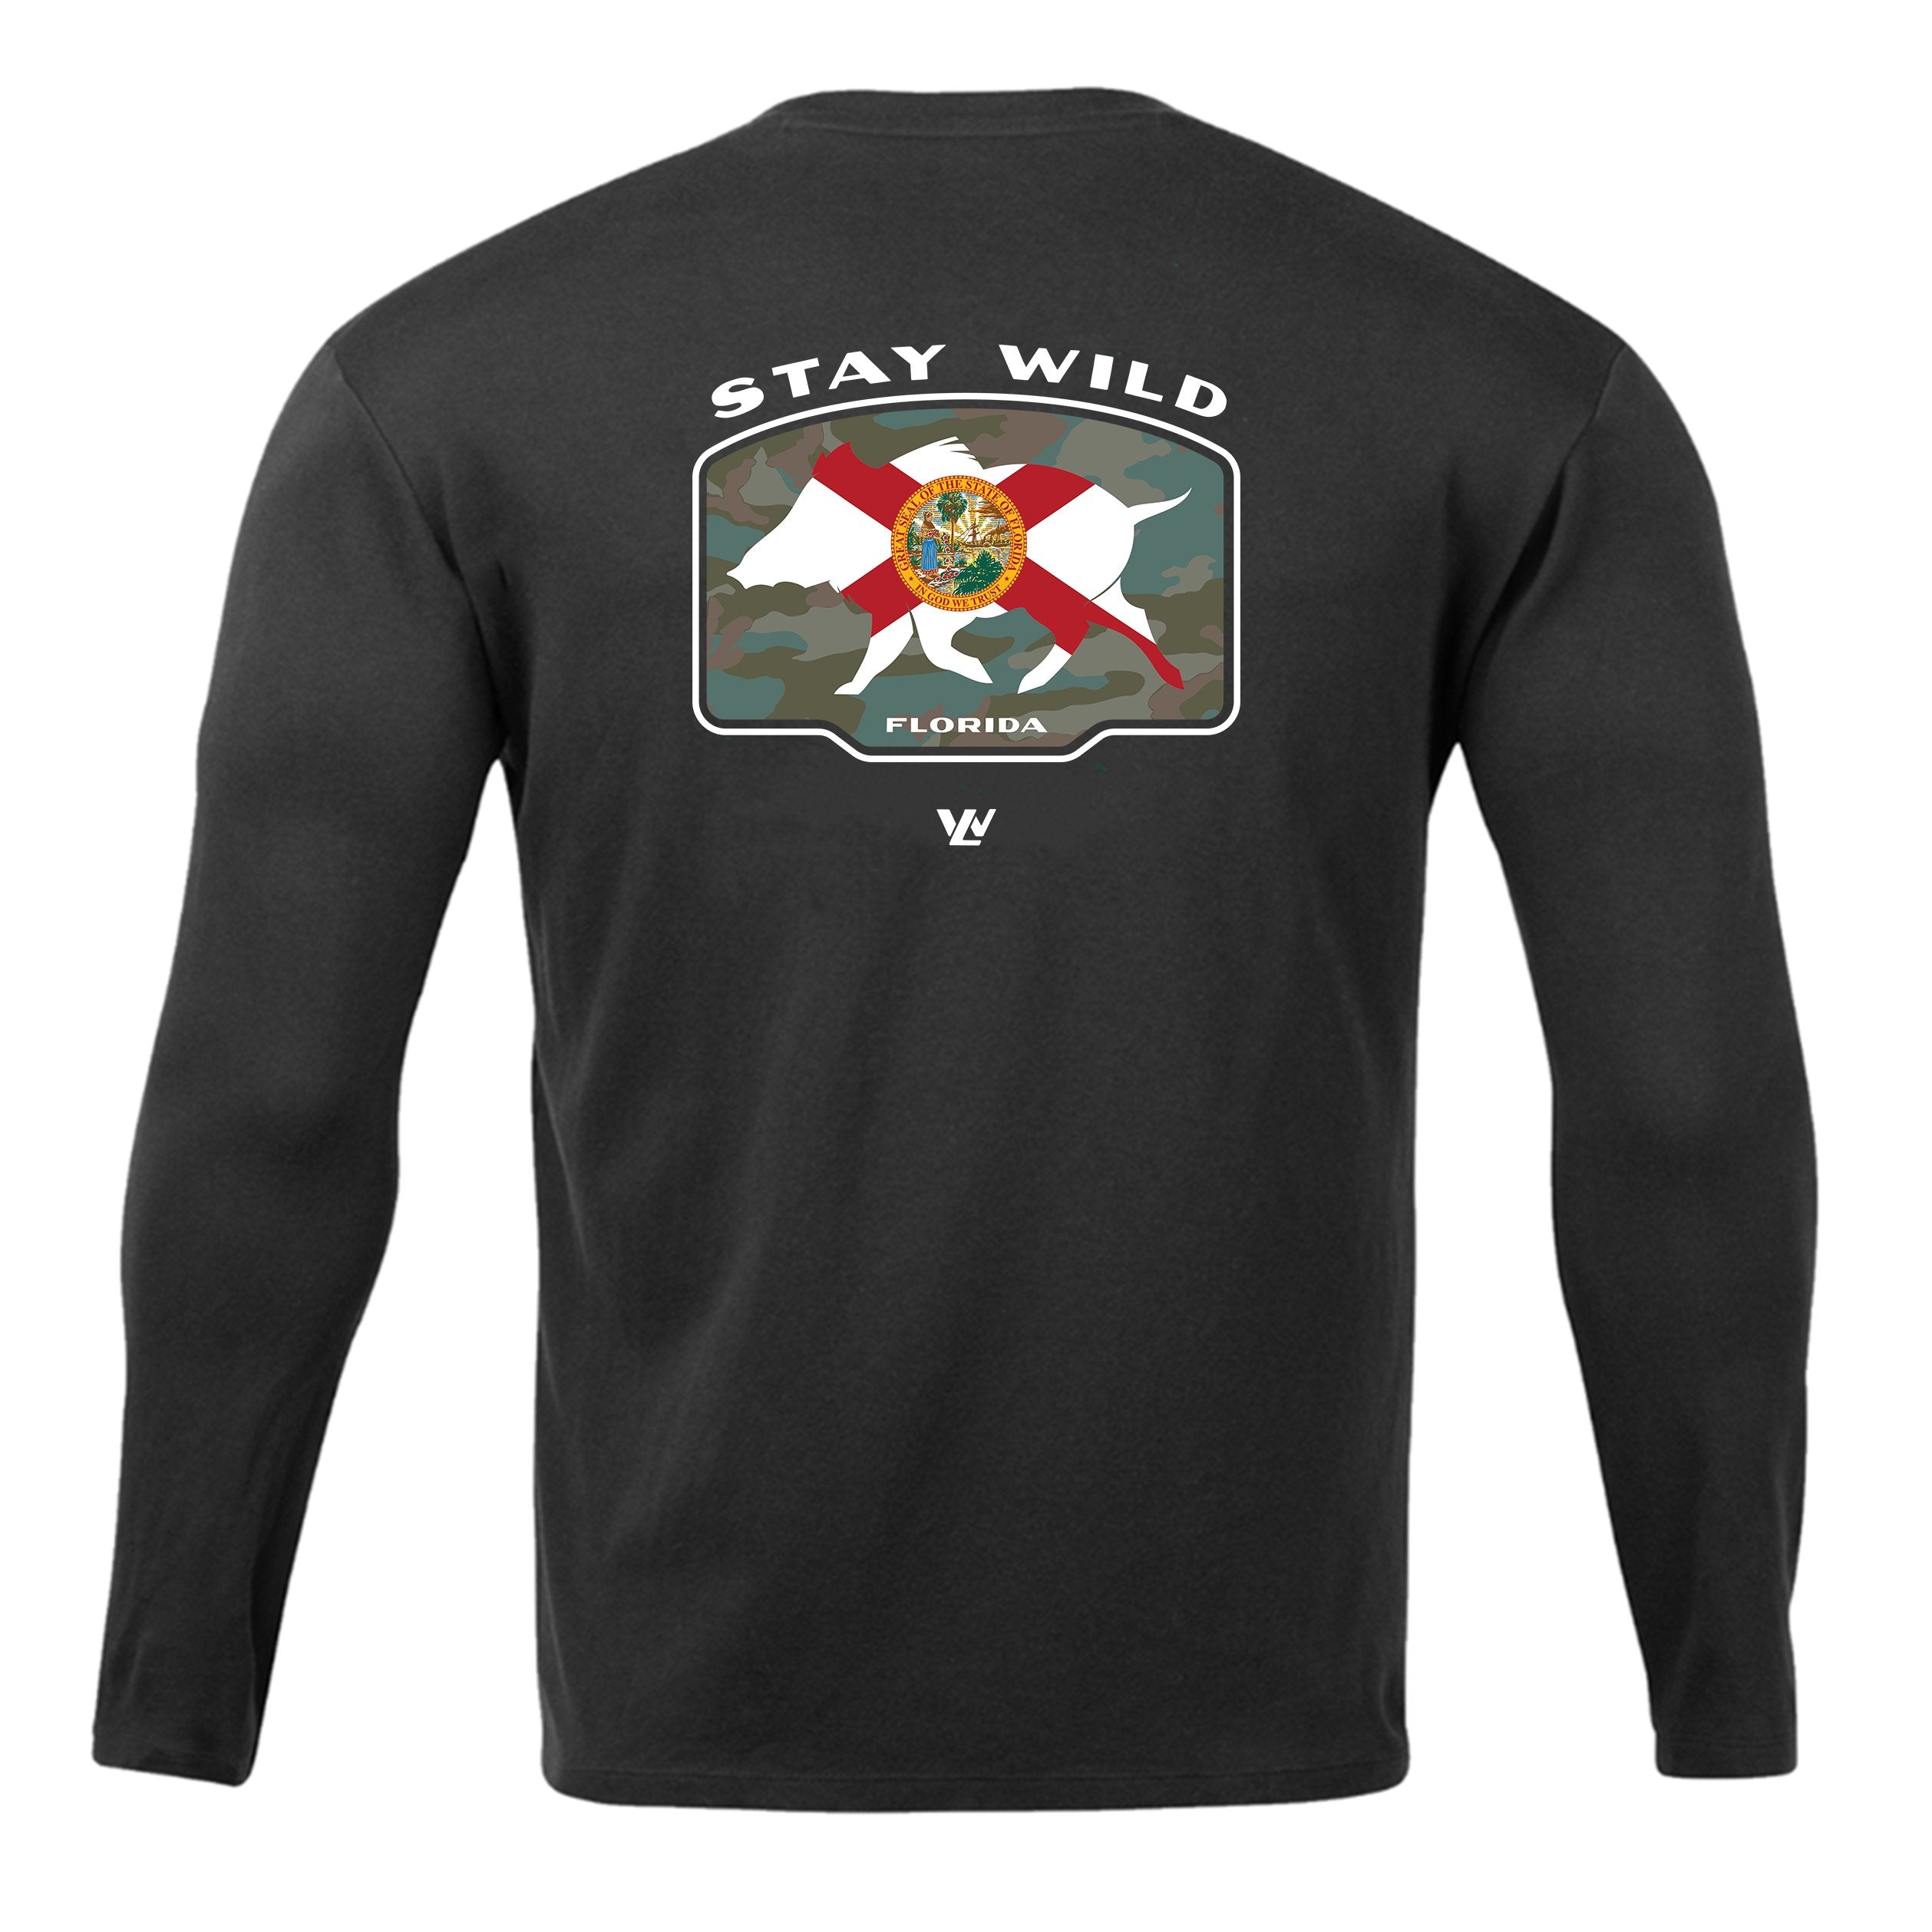 Stay Wild Florida Long Sleeve Performance Shirt - Wilding Life